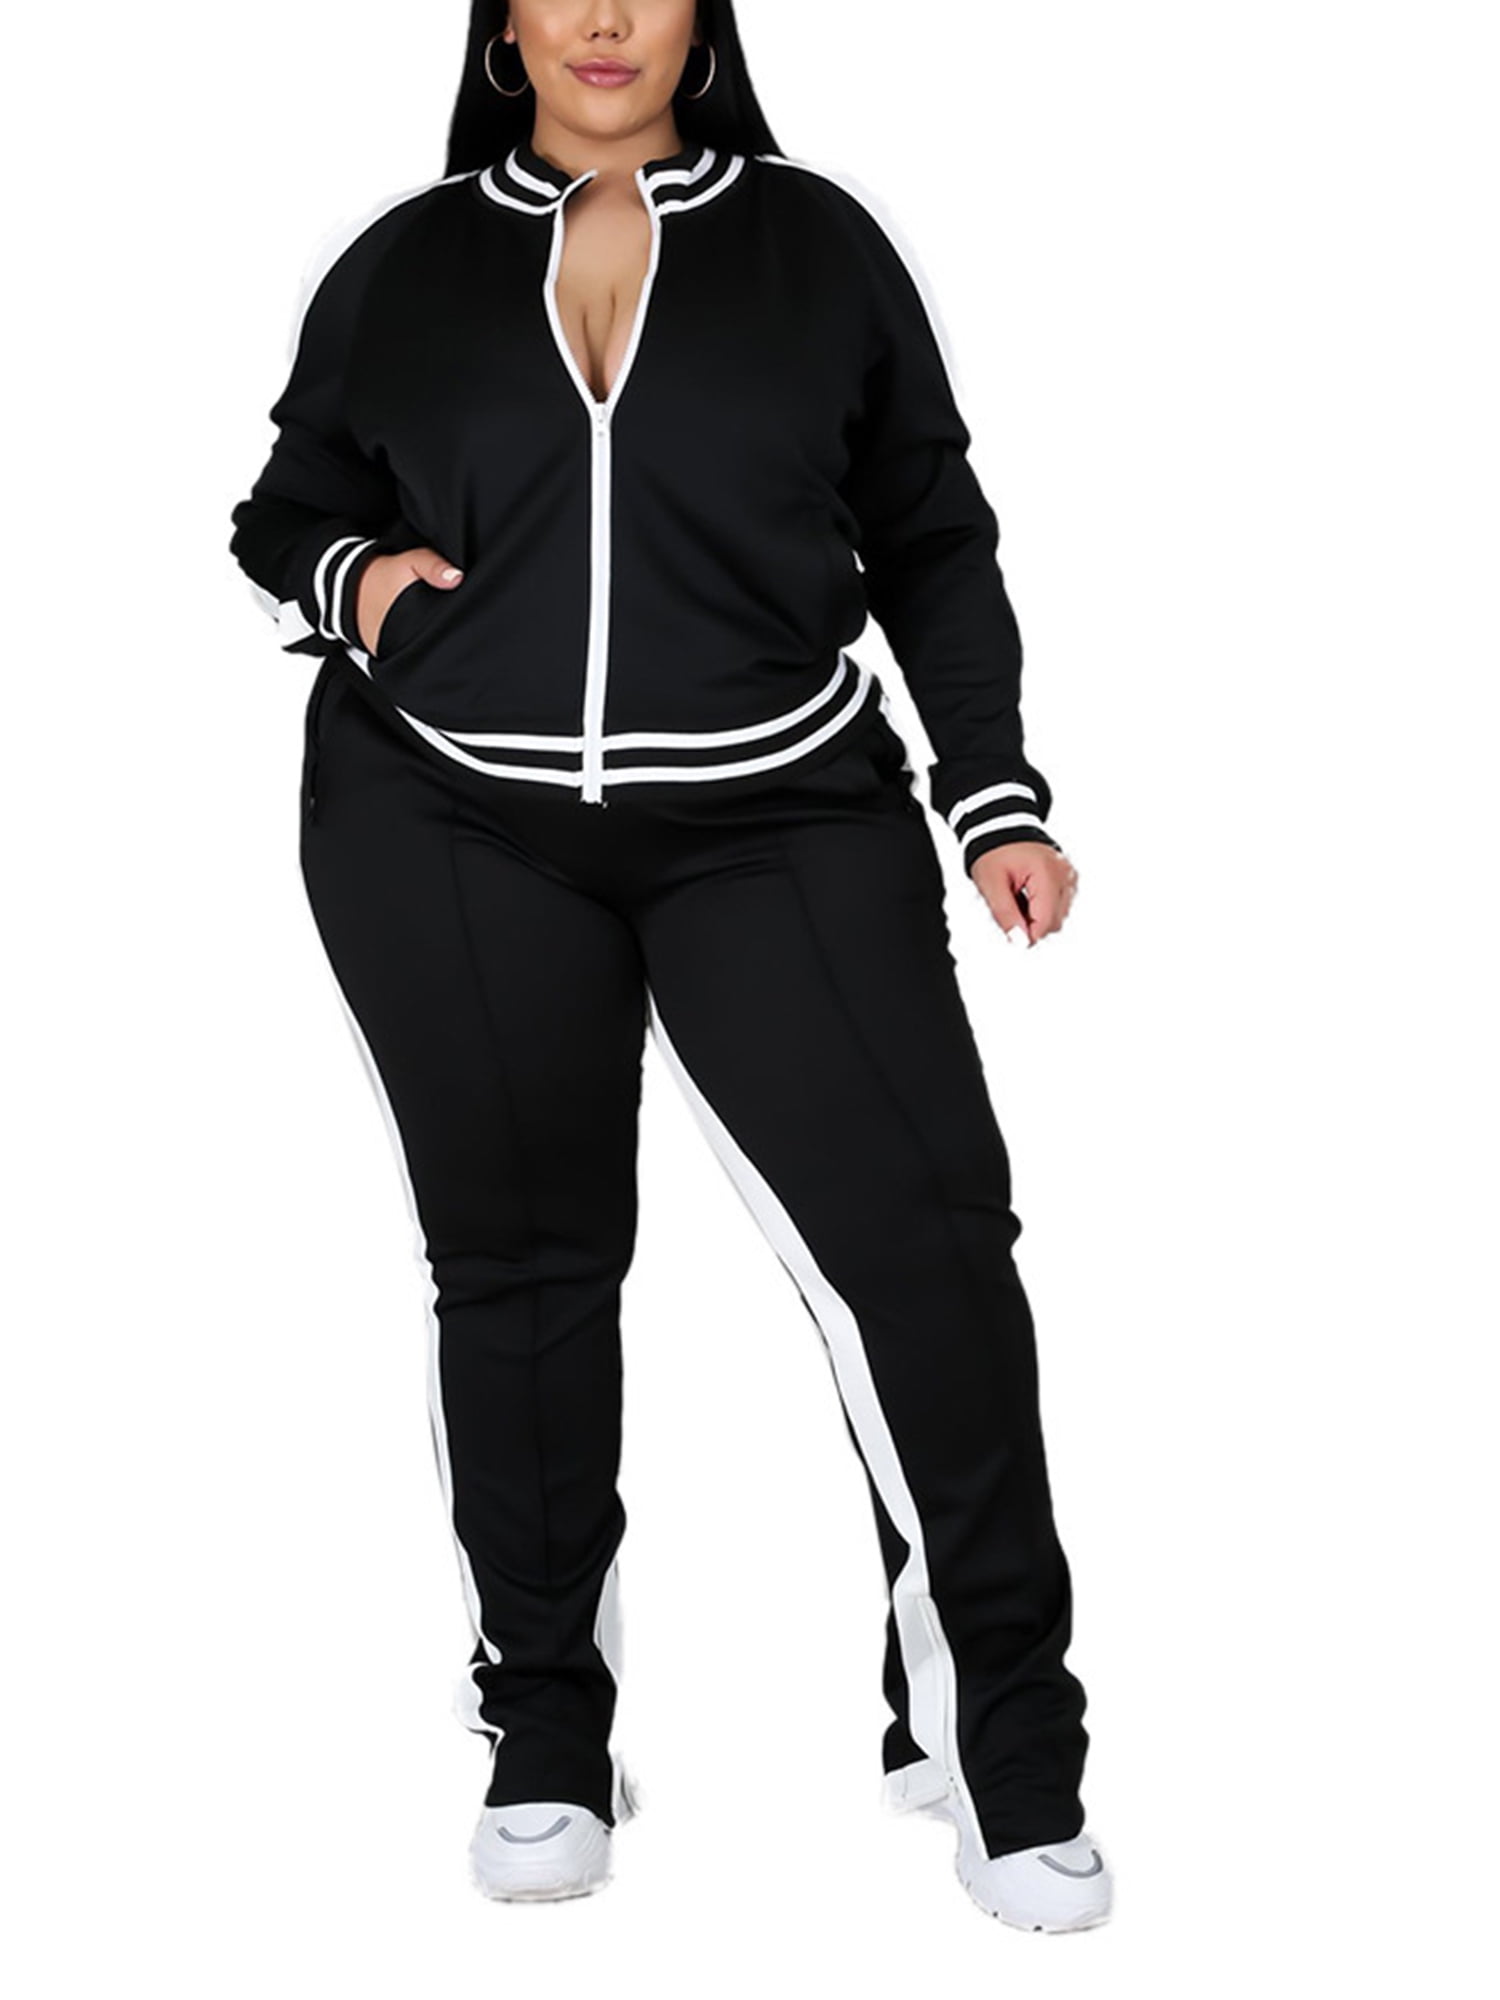 Capreze Plus Size Two Piece Outfits for Women Oversized Casual Track Suits  for Ladies Jogging Set Zipper Sweatshirt with Pockets Black XXL